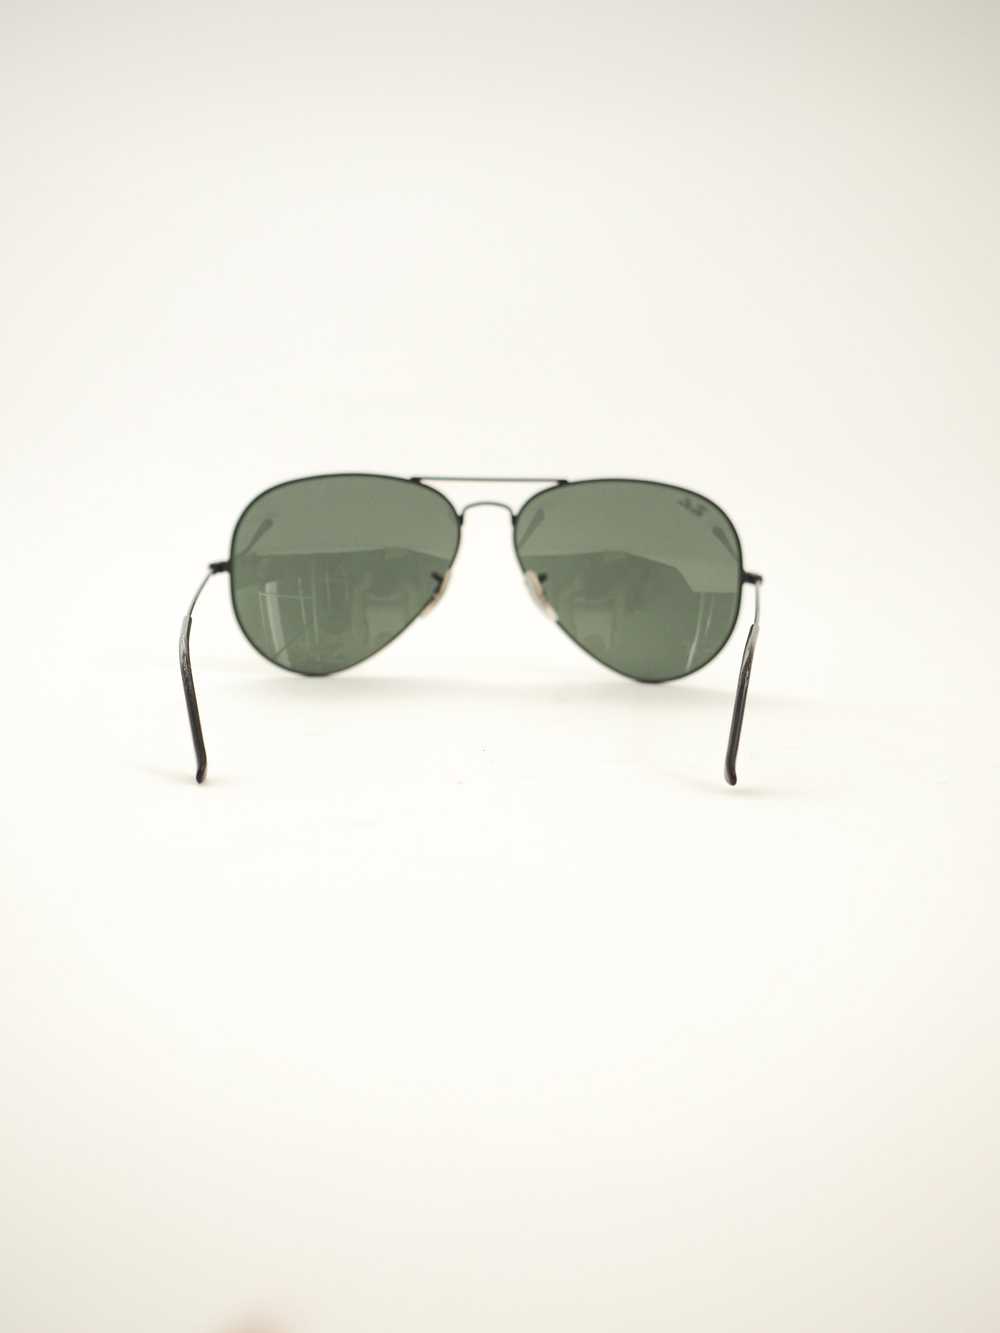 RayBan Aviator Classic Sunglasses - image 4